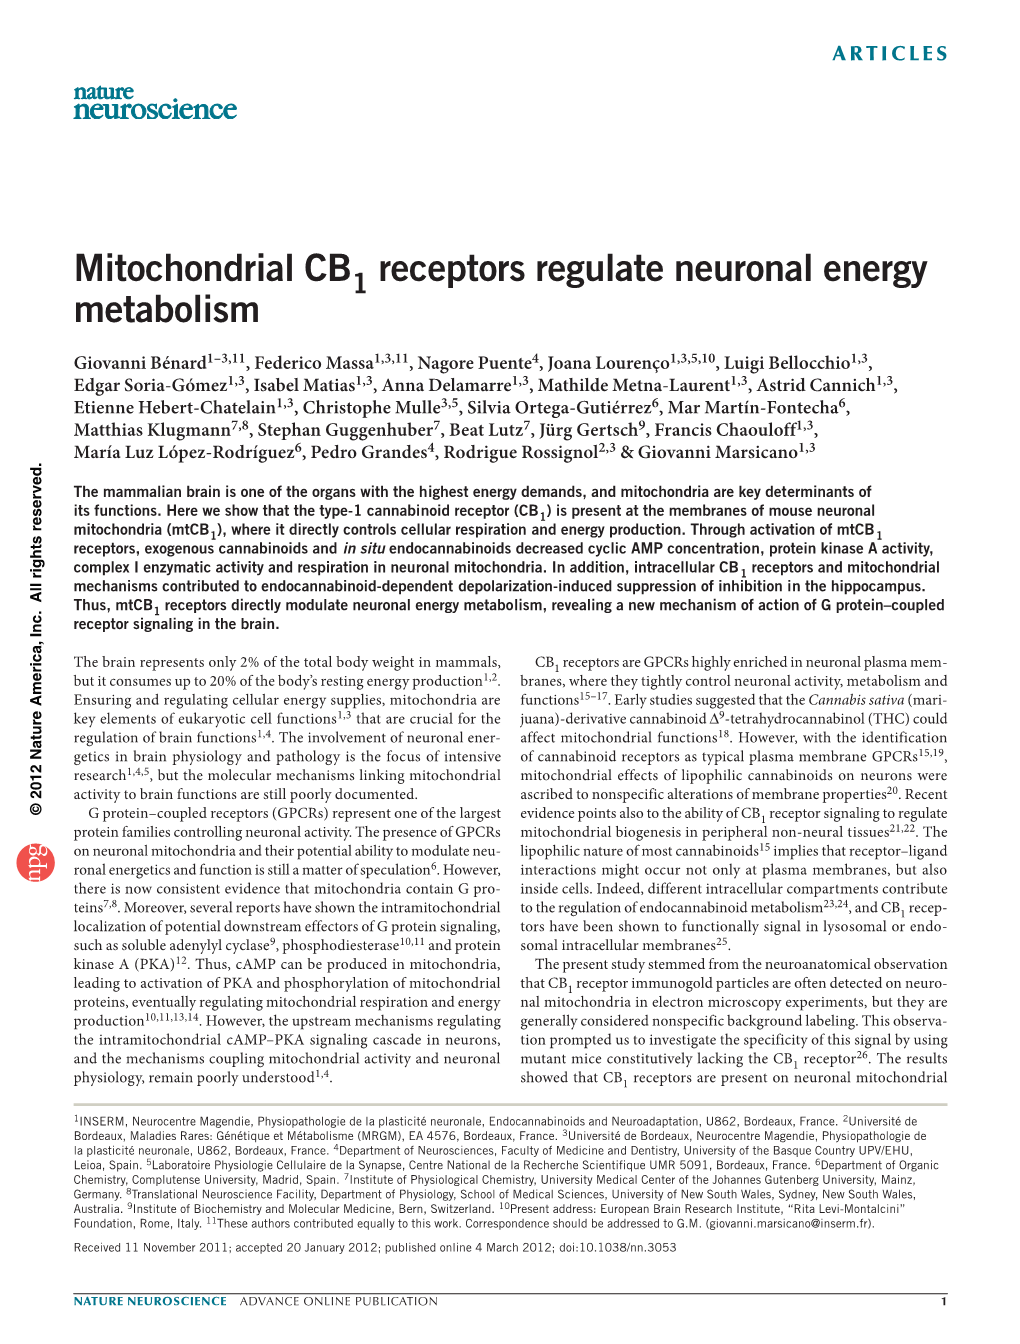 Mitochondrial CB1 Receptors Regulate Neuronal Energy Metabolism